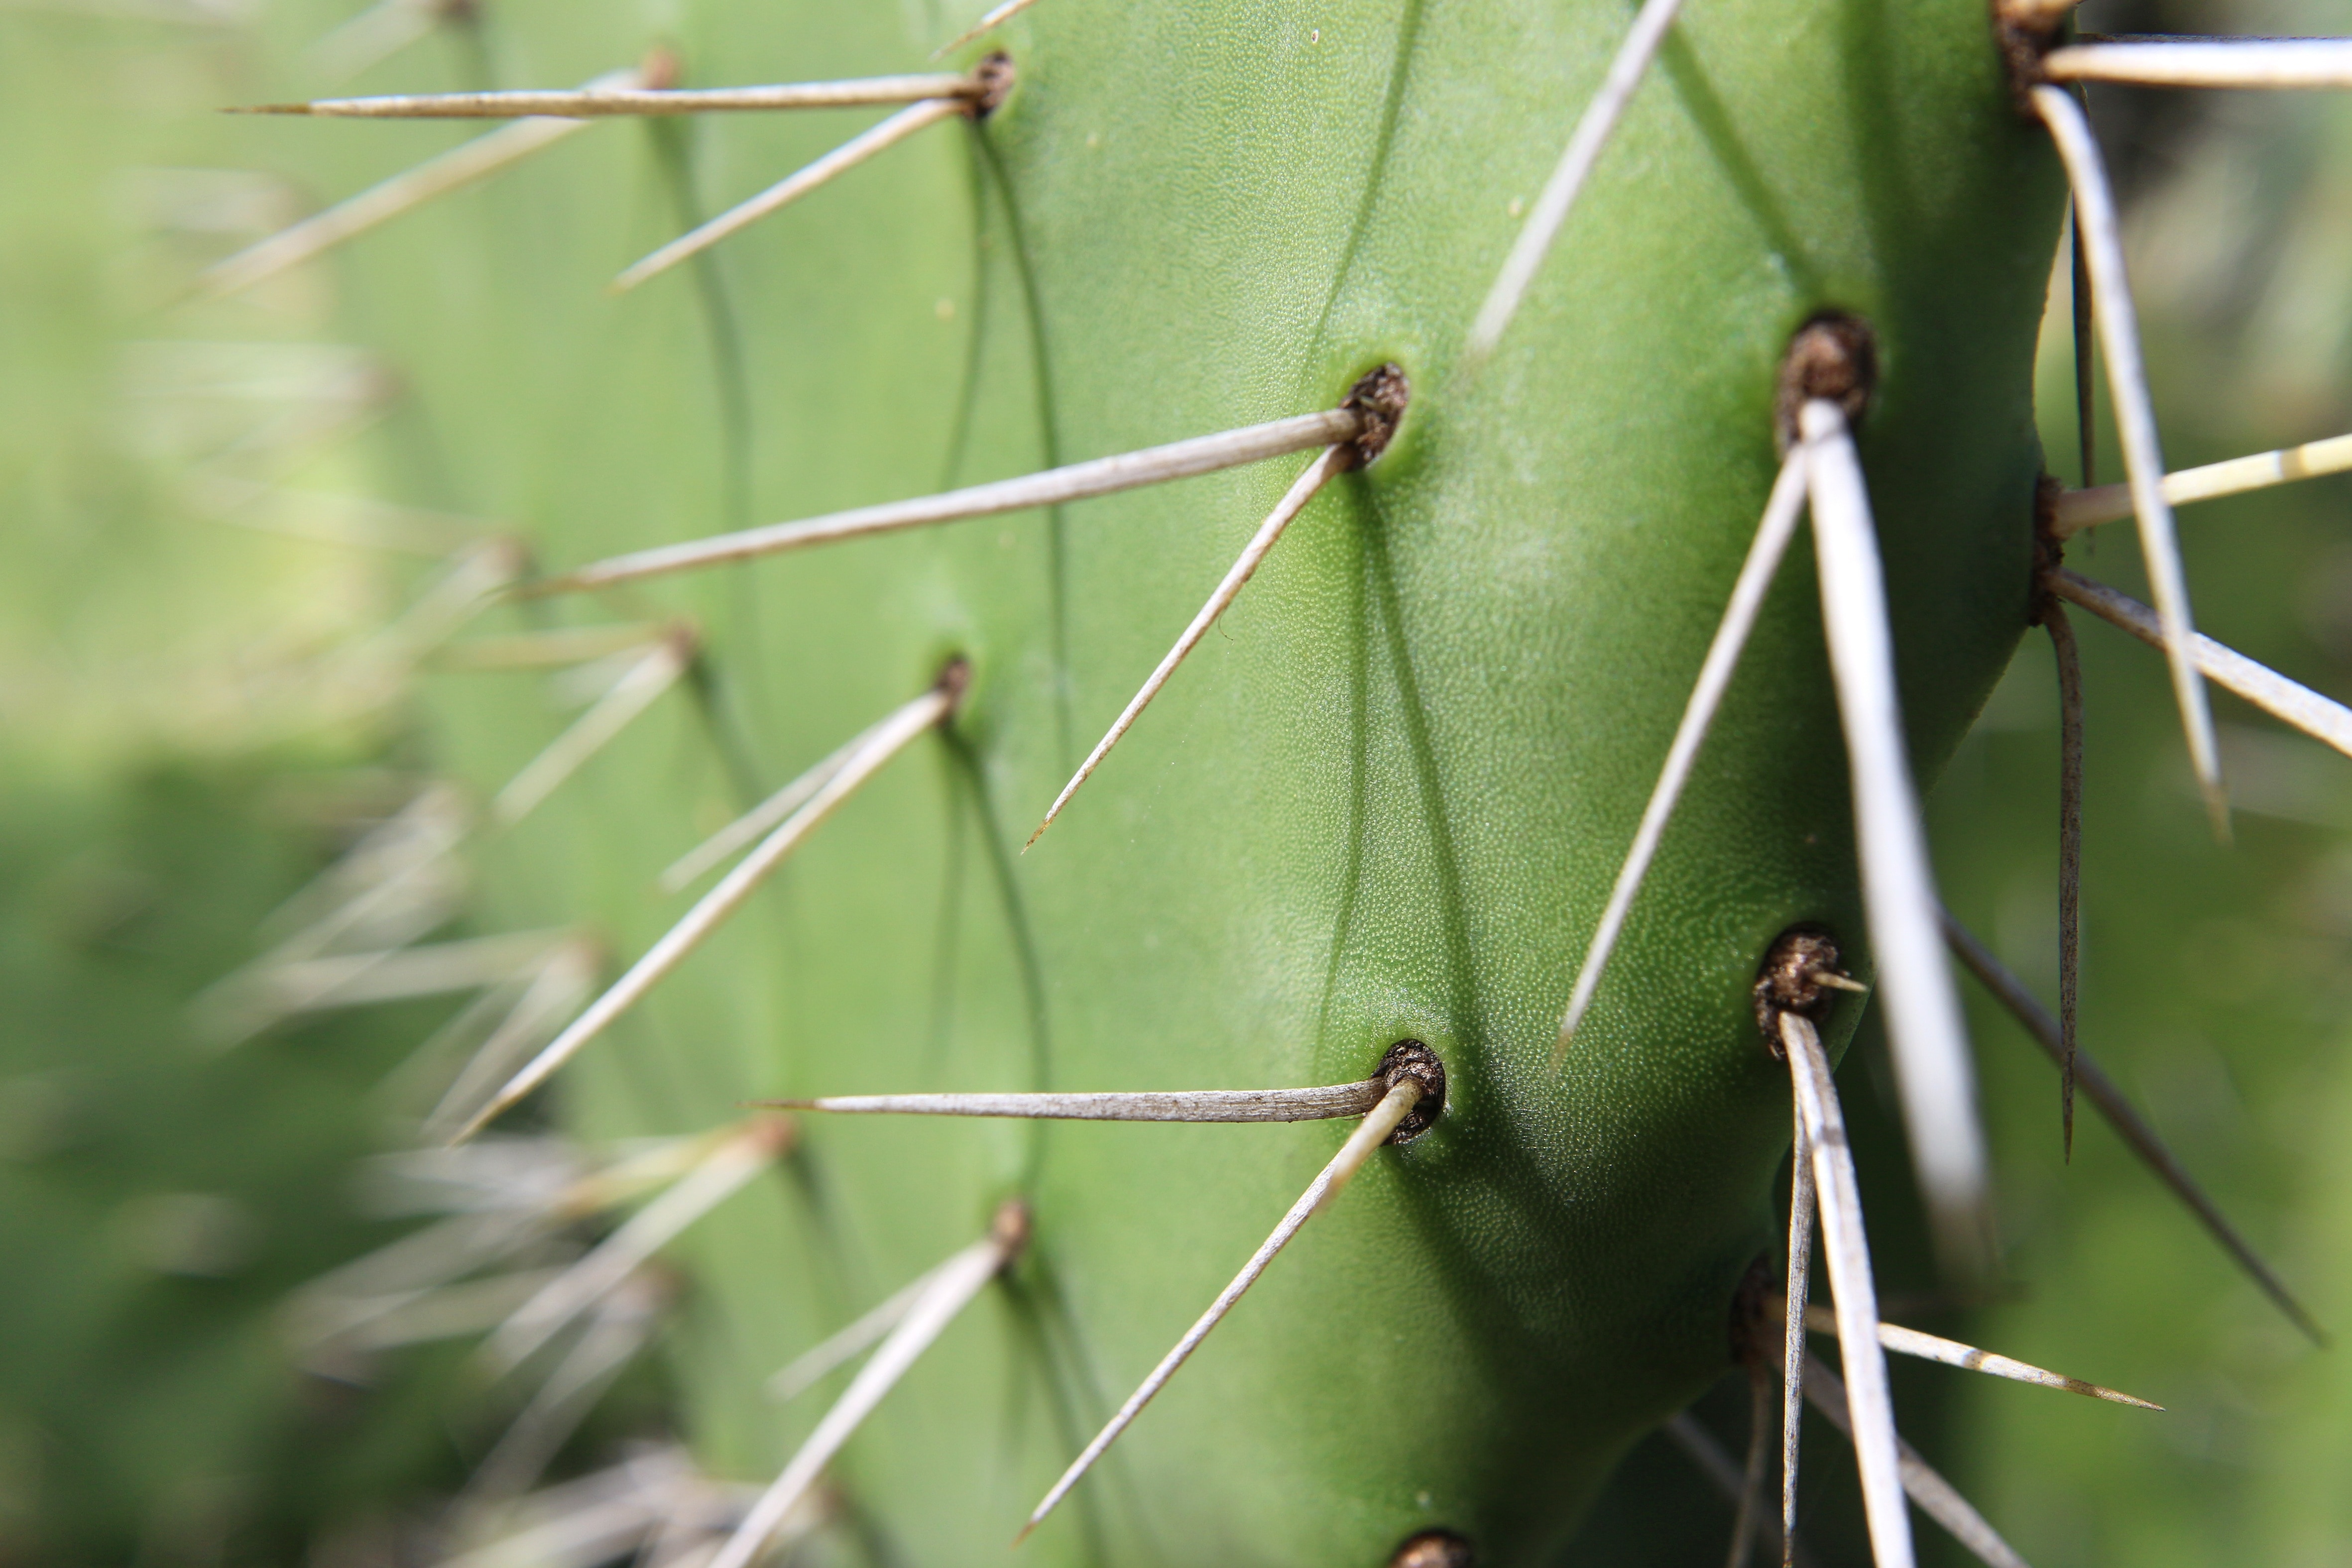 Macro Photo of a green cactus' thorns